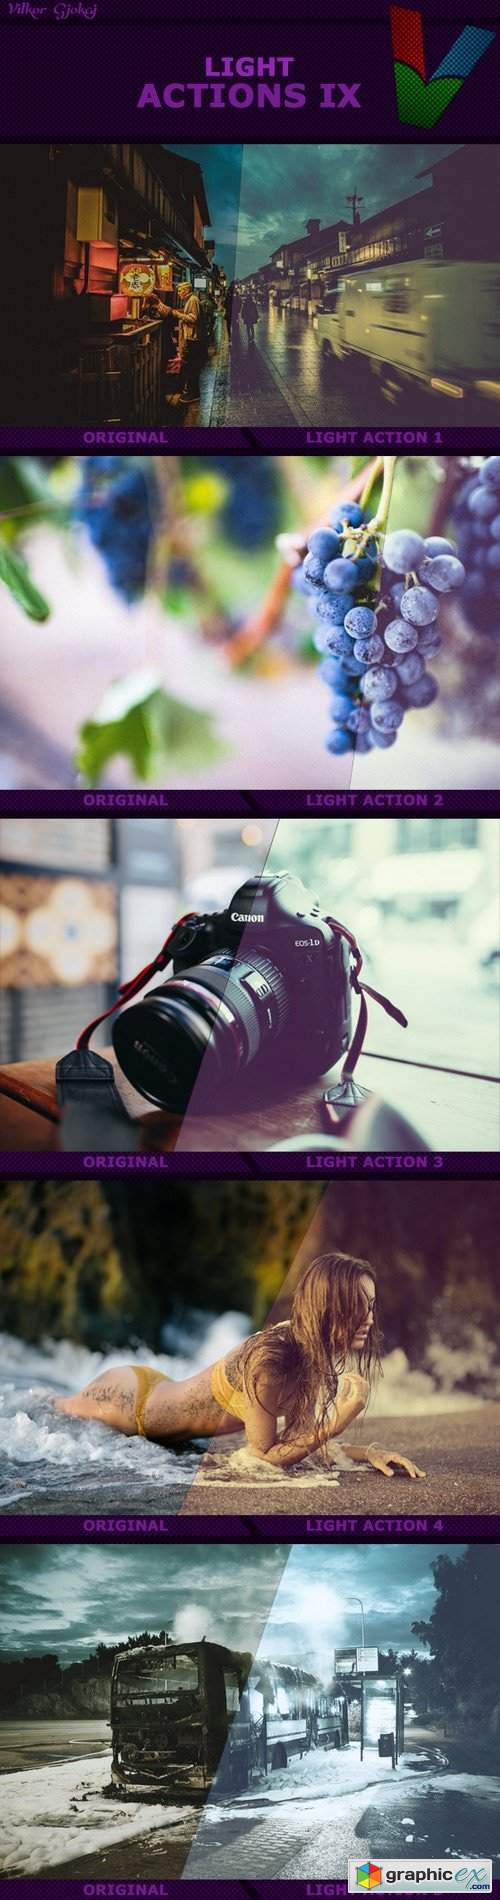 Light Actions IX